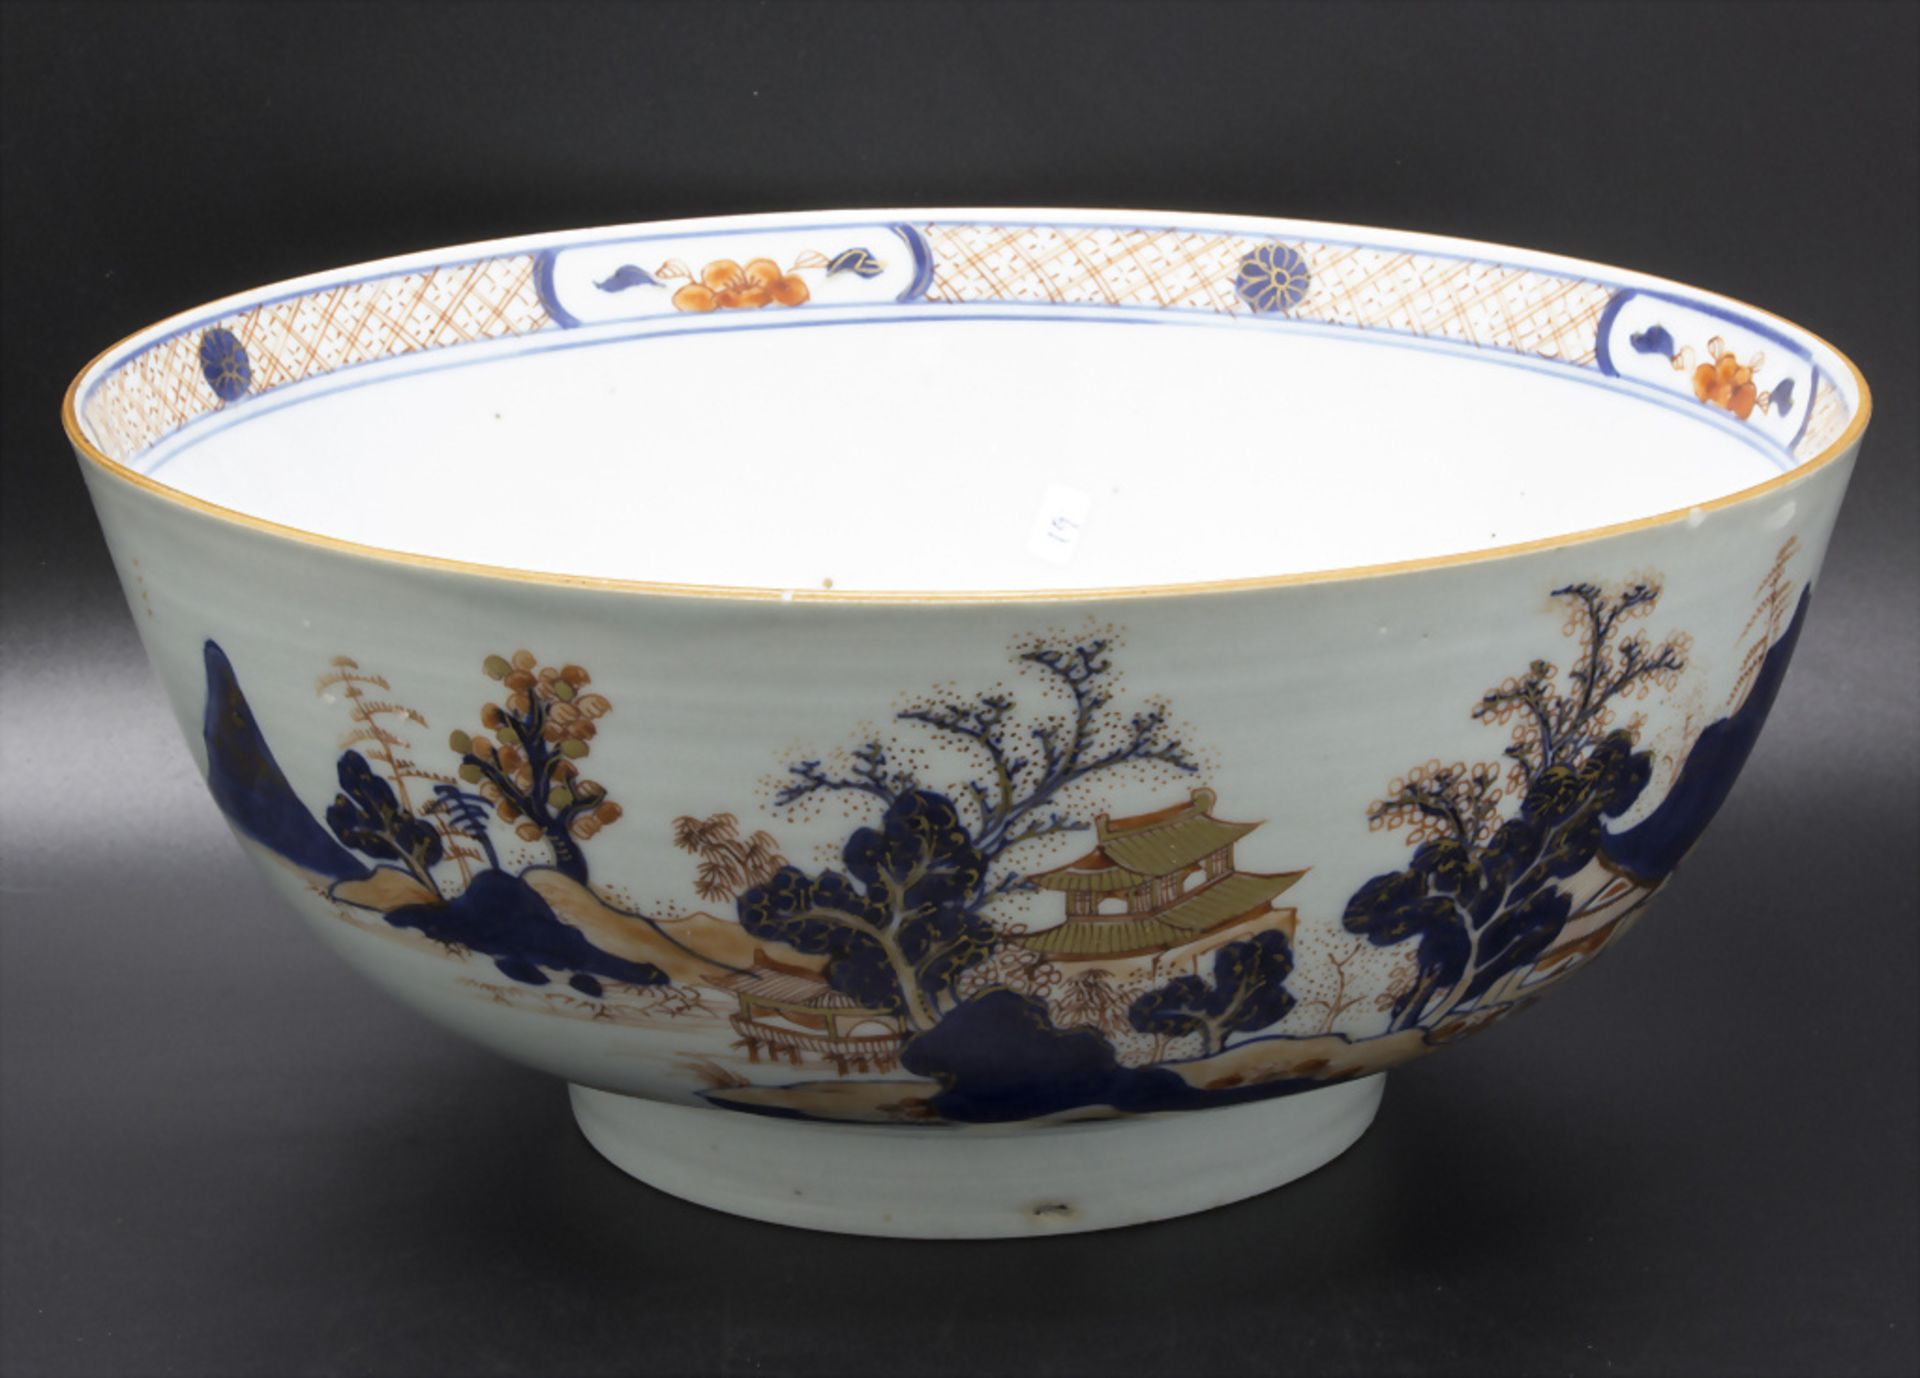 Große Porzellan Schale 'Pavillion-Inseln'/ A large porcelain bowl 'Pavilion-islands', 18. Jh.